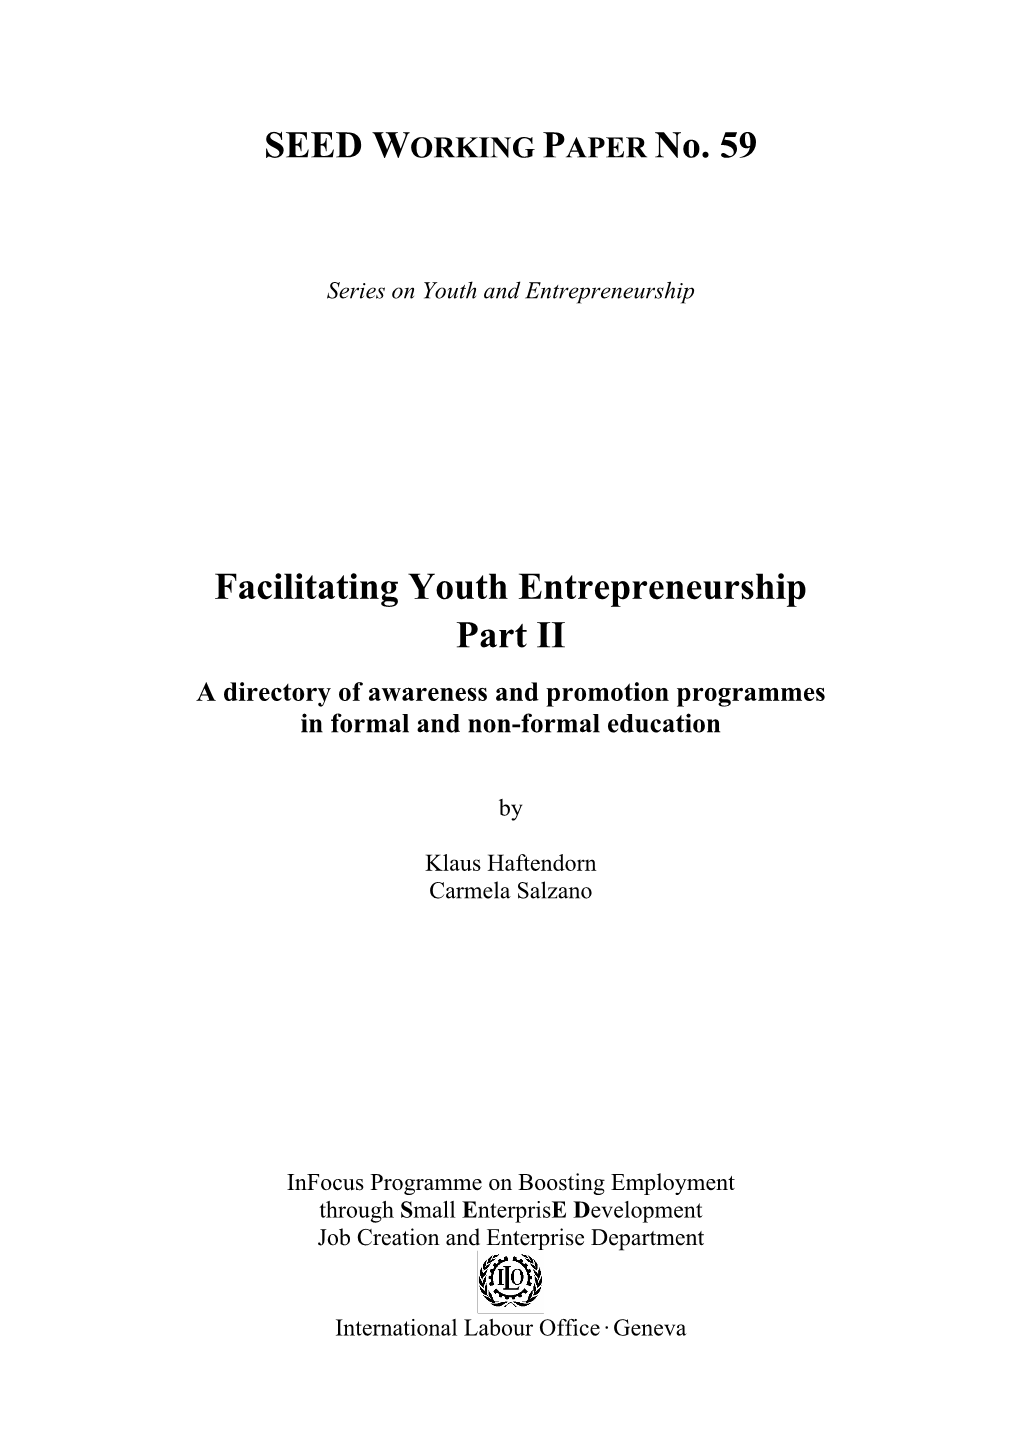 Facilitating Youth Entrepreneurship Part II